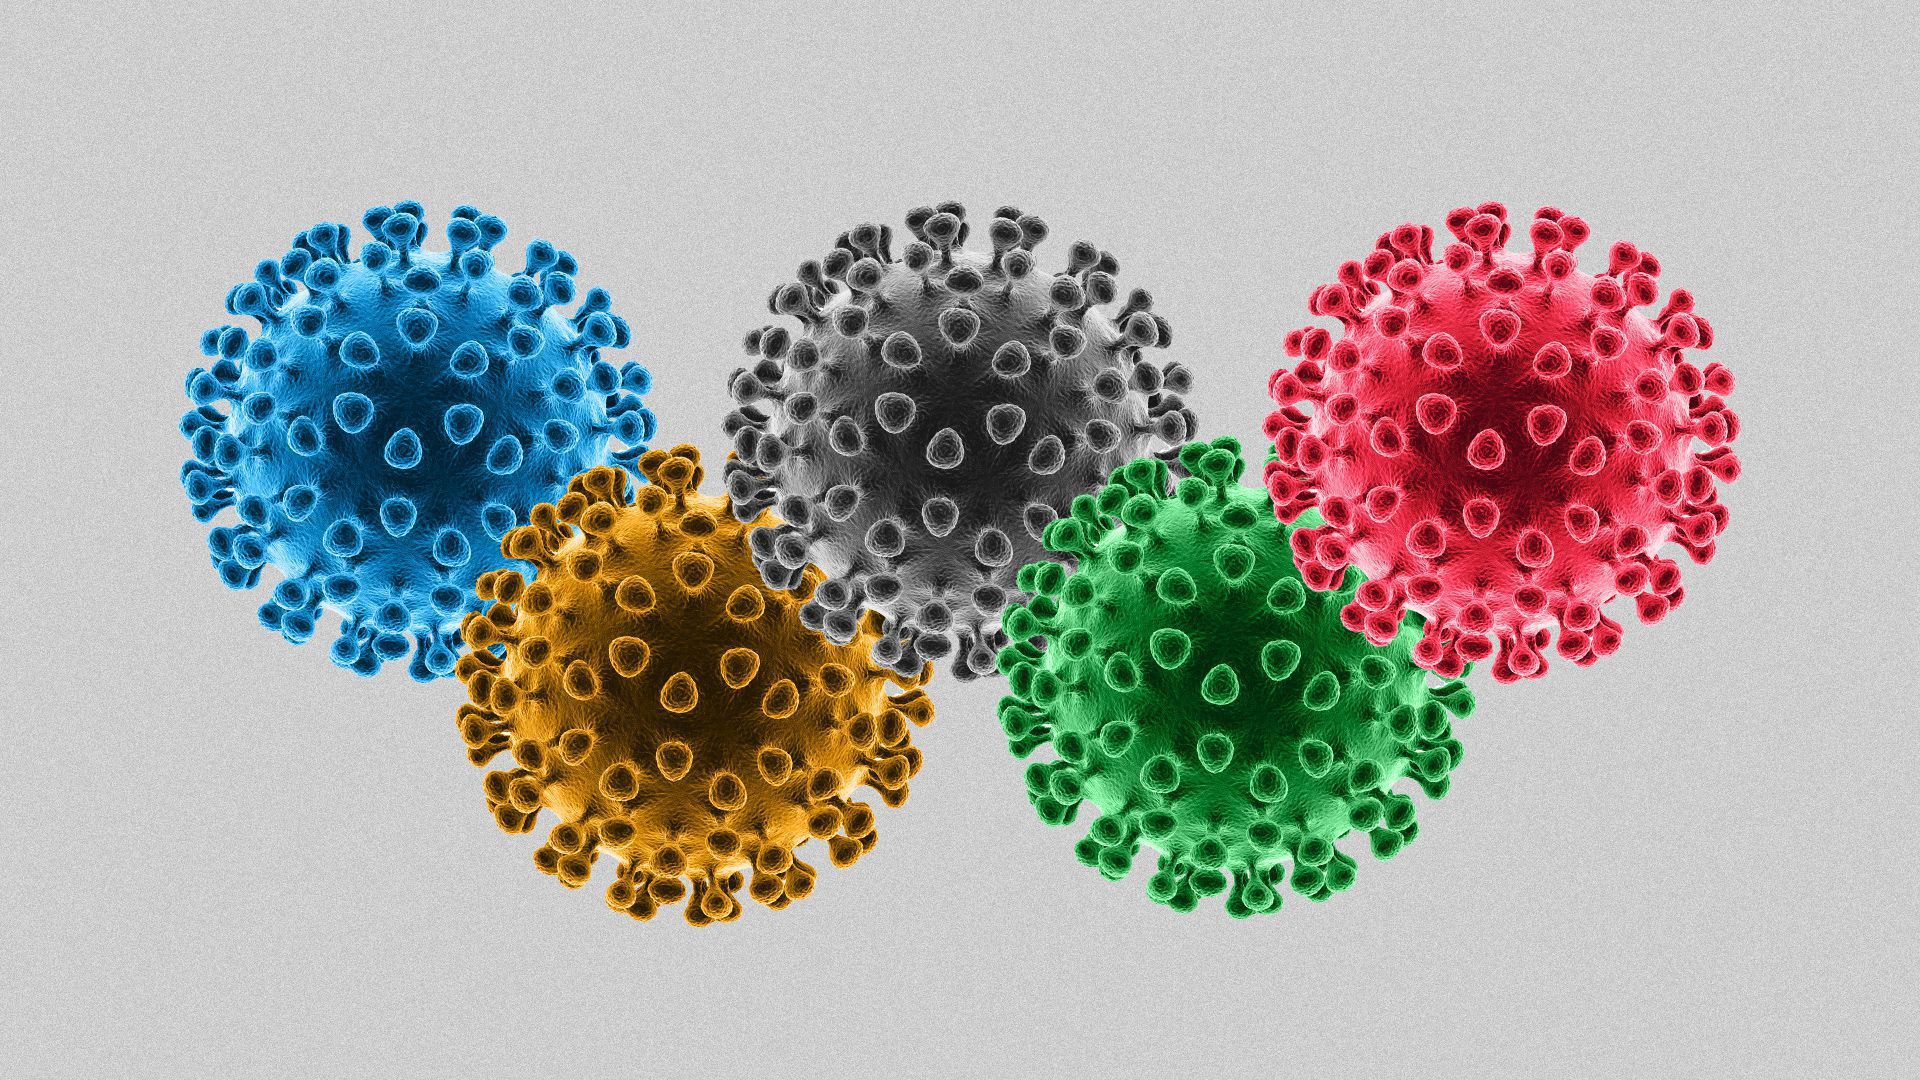 Illustration of the coronavirus arranged as the Olympic rings